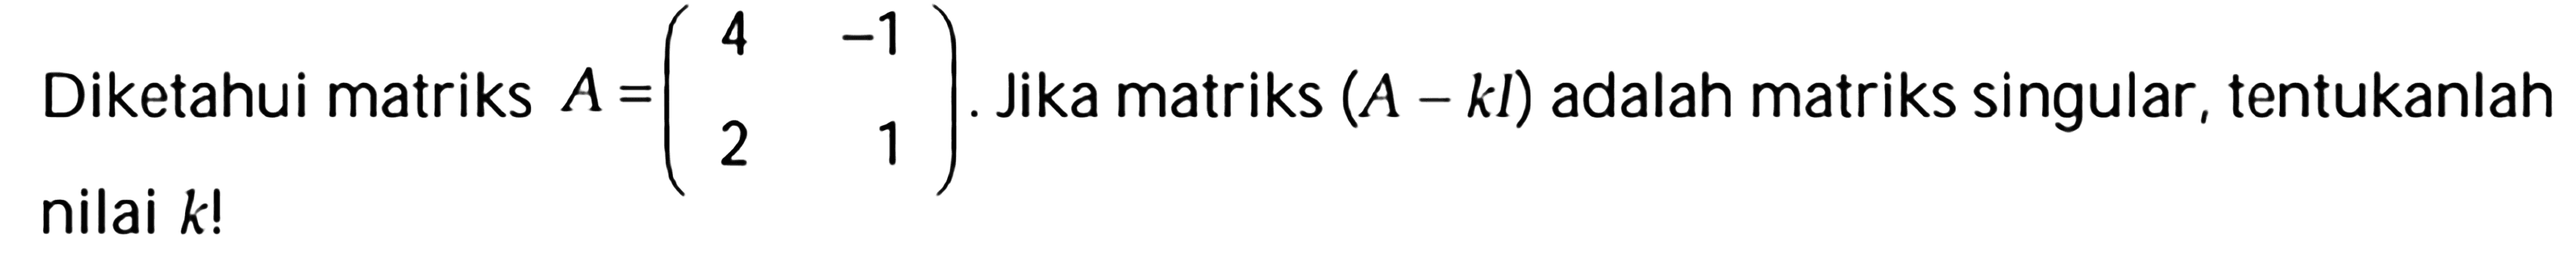 Diketahui matriks A=(4 -1 2 1) jika matriks (A-kl) adalah matriks singular, tentukan nilai k!